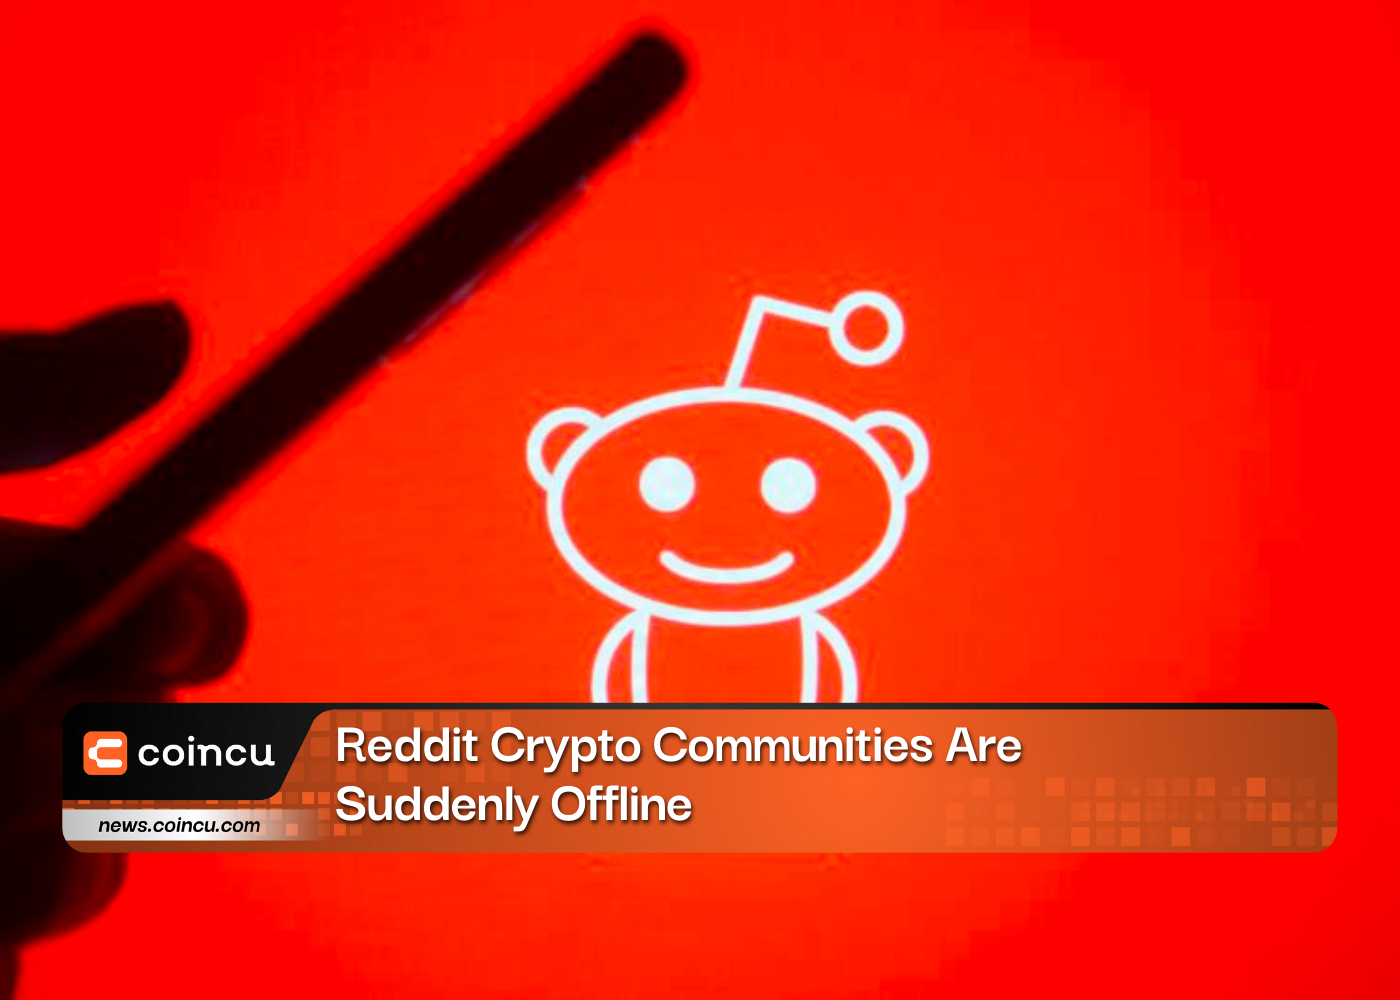 Reddit Crypto Communities Are Suddenly Offline